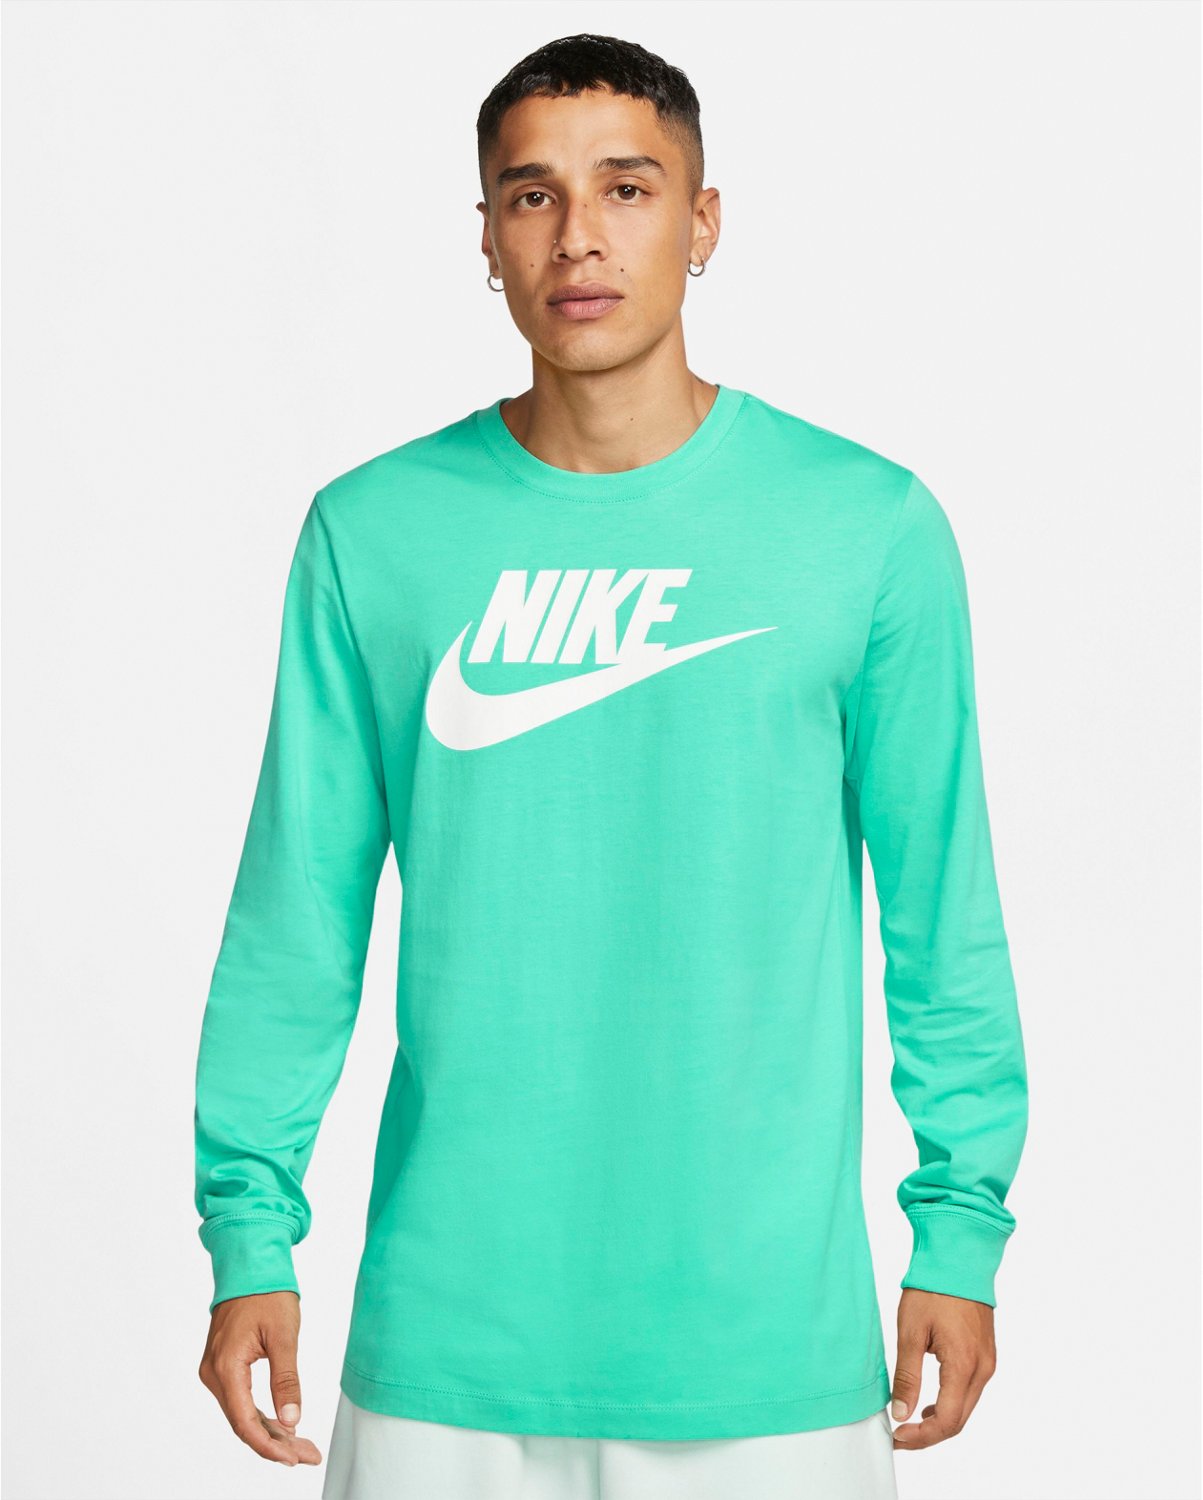 Nike / Men's Dallas Mavericks Dri-FIT Long Sleeve Shooting Shirt